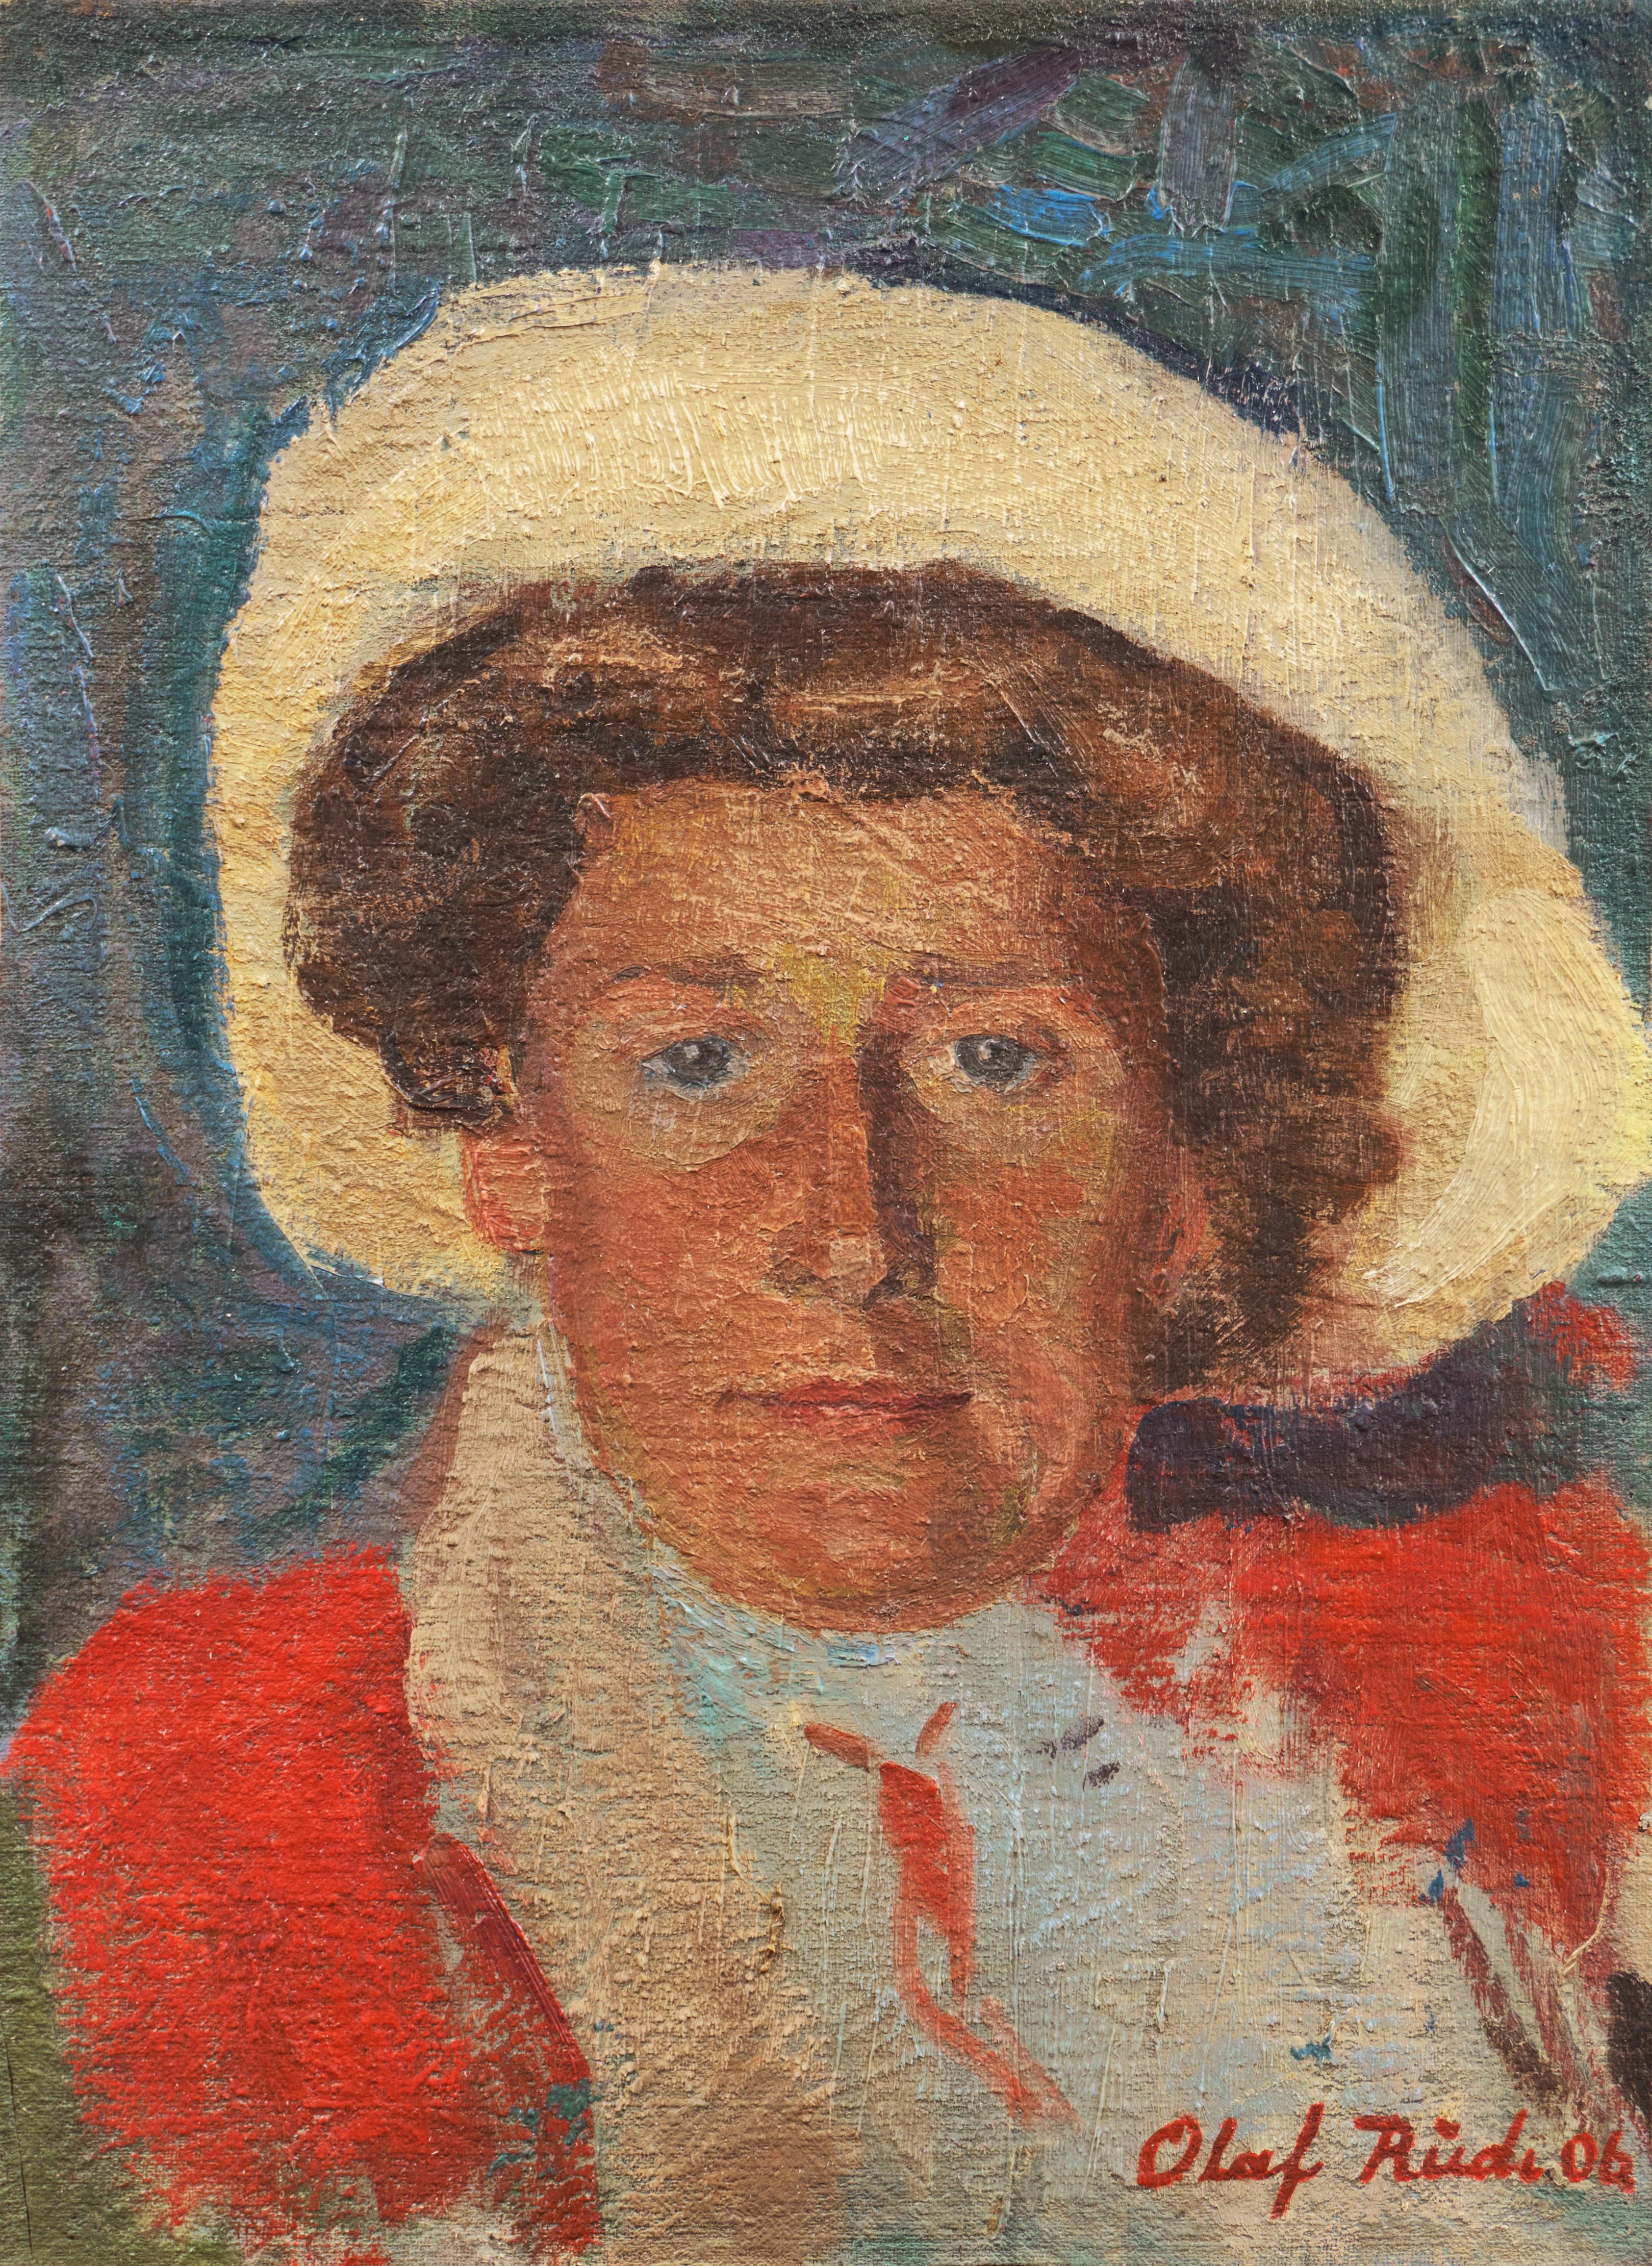 Olaf Rude Portrait Painting - 'Portrait of a Woman in a Straw Hat', Paris, Bornholm, Danish Post-Impressionist